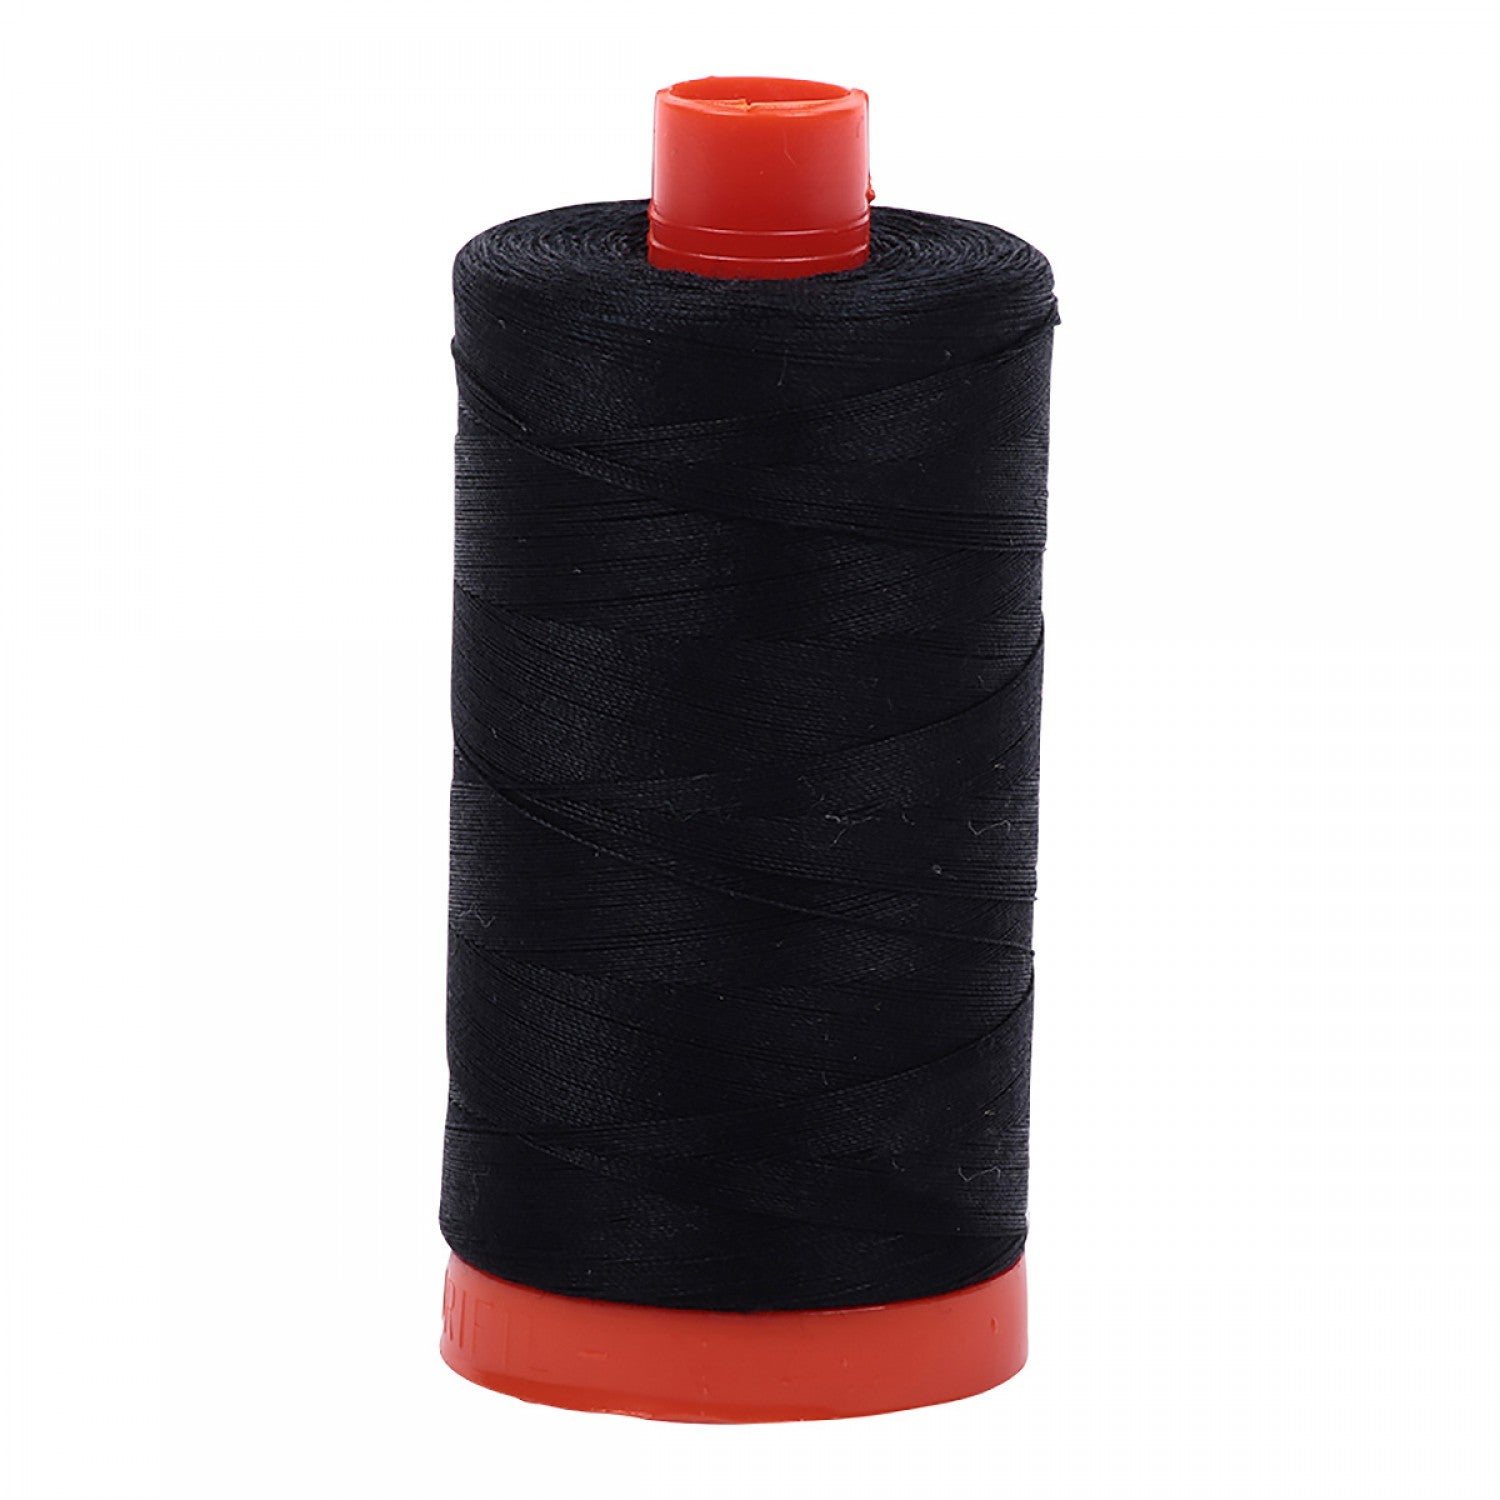 Aurifil Mako 50 wt Cotton Thread - 1422 yds - Black (2692)